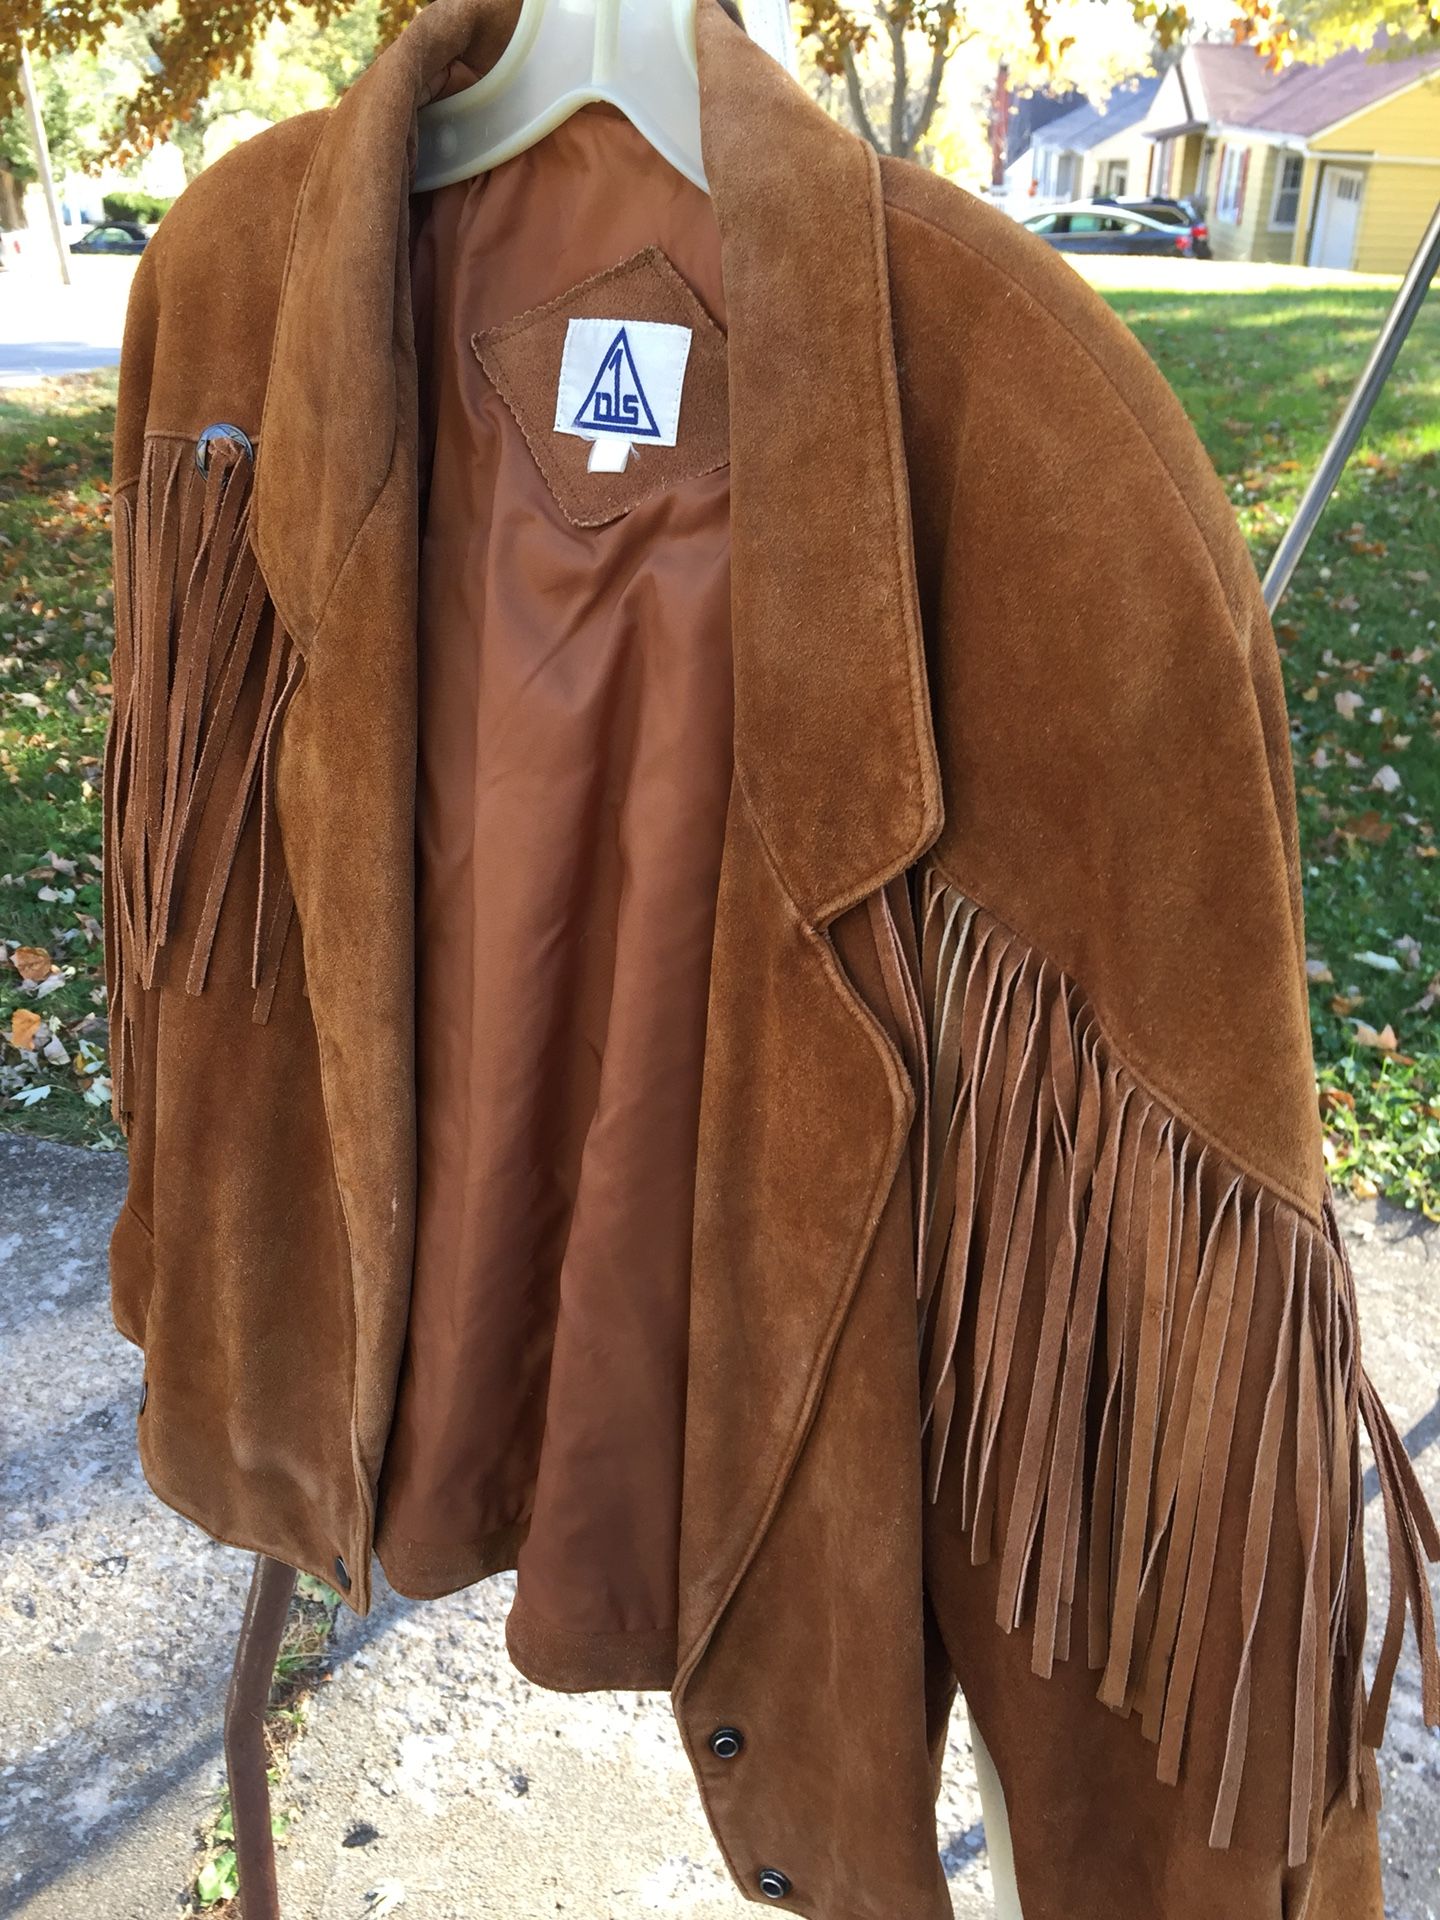 Women’s western jacket with fringes.